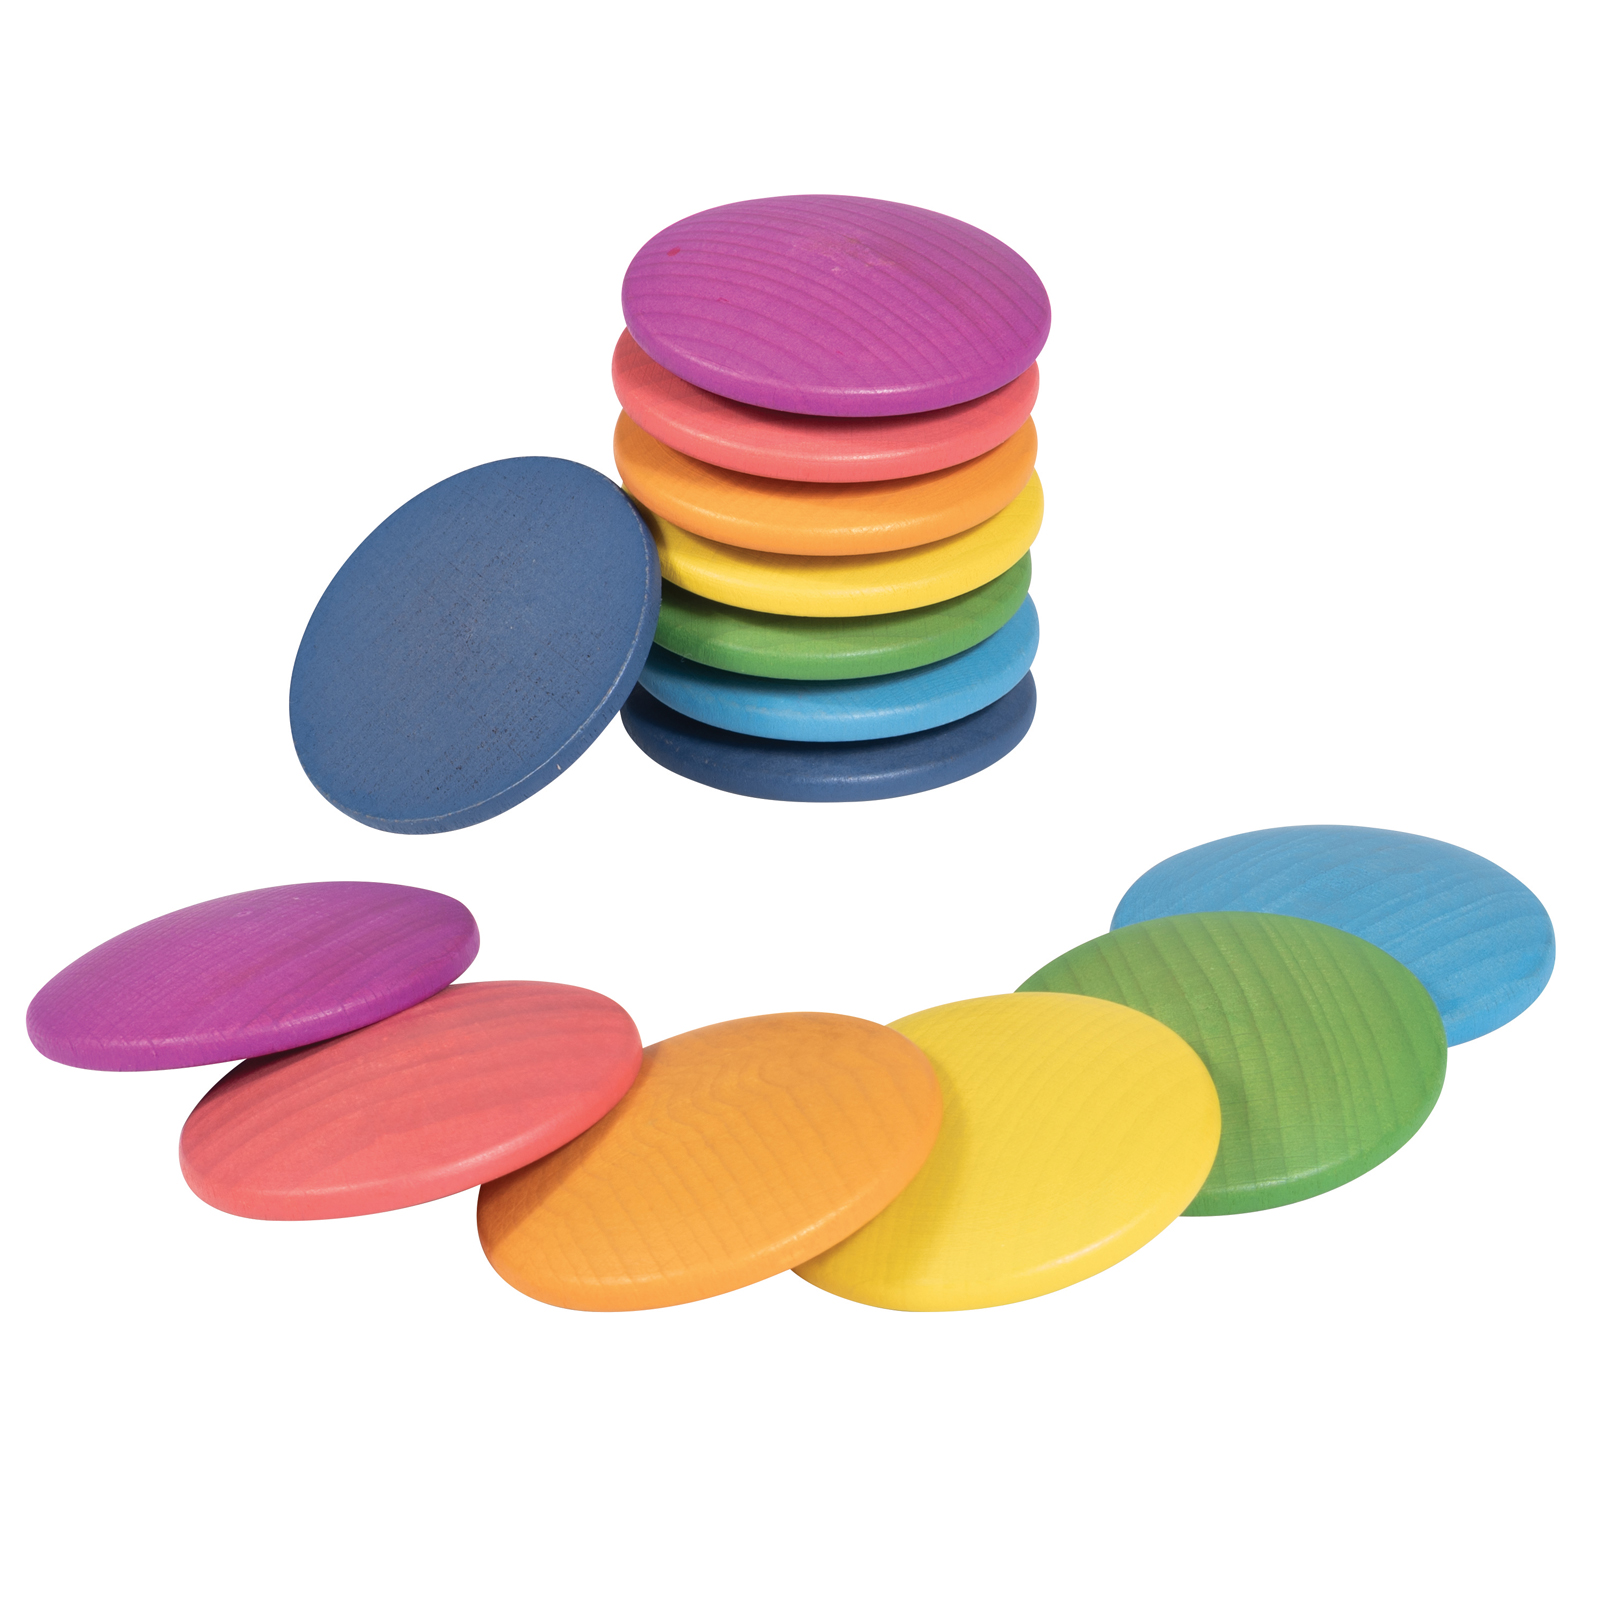 TickiT Rainbow Wooden Discs - Set of 14